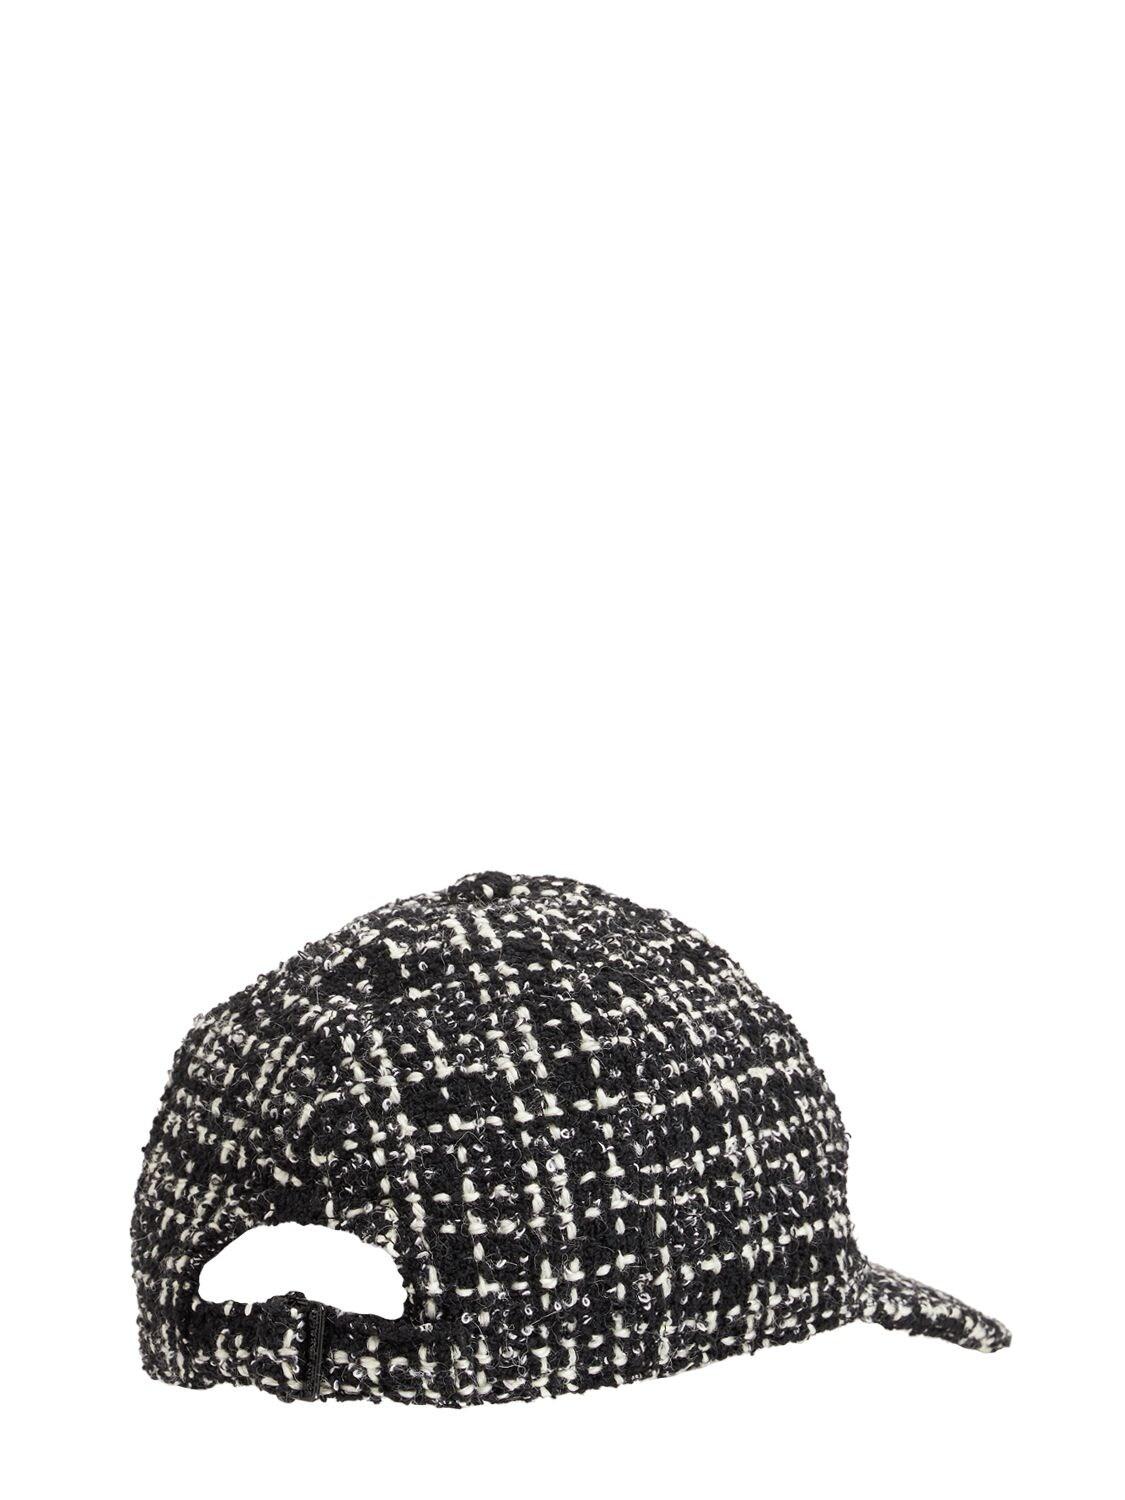 Saint Laurent Casquette Tweed Hat in Black/Ivory (Black) | Lyst